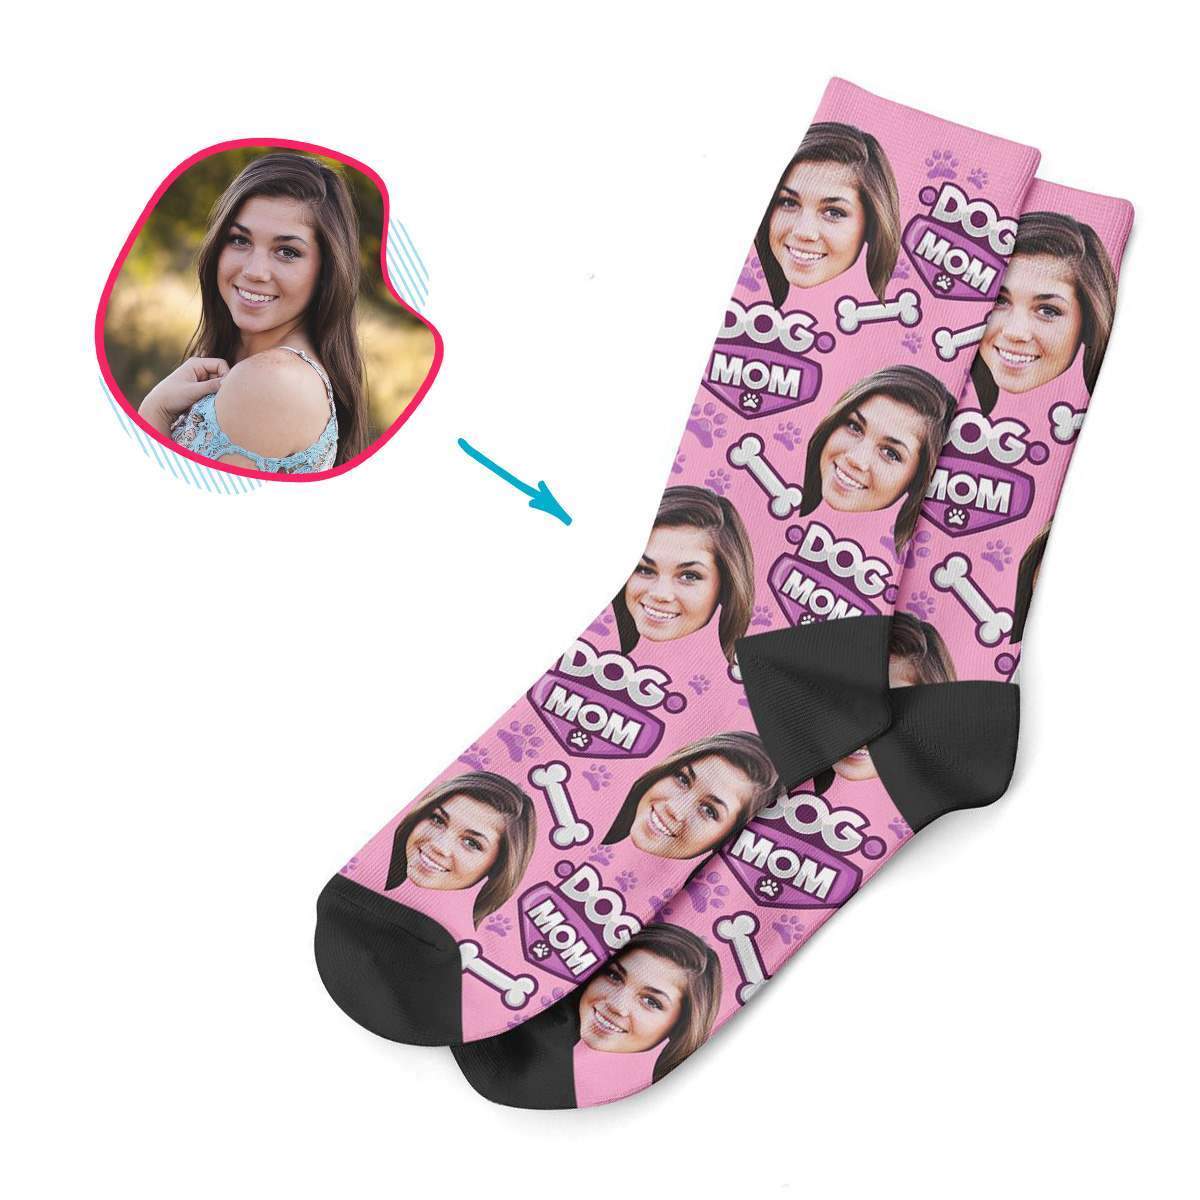 Dog Mom Personalized Socks